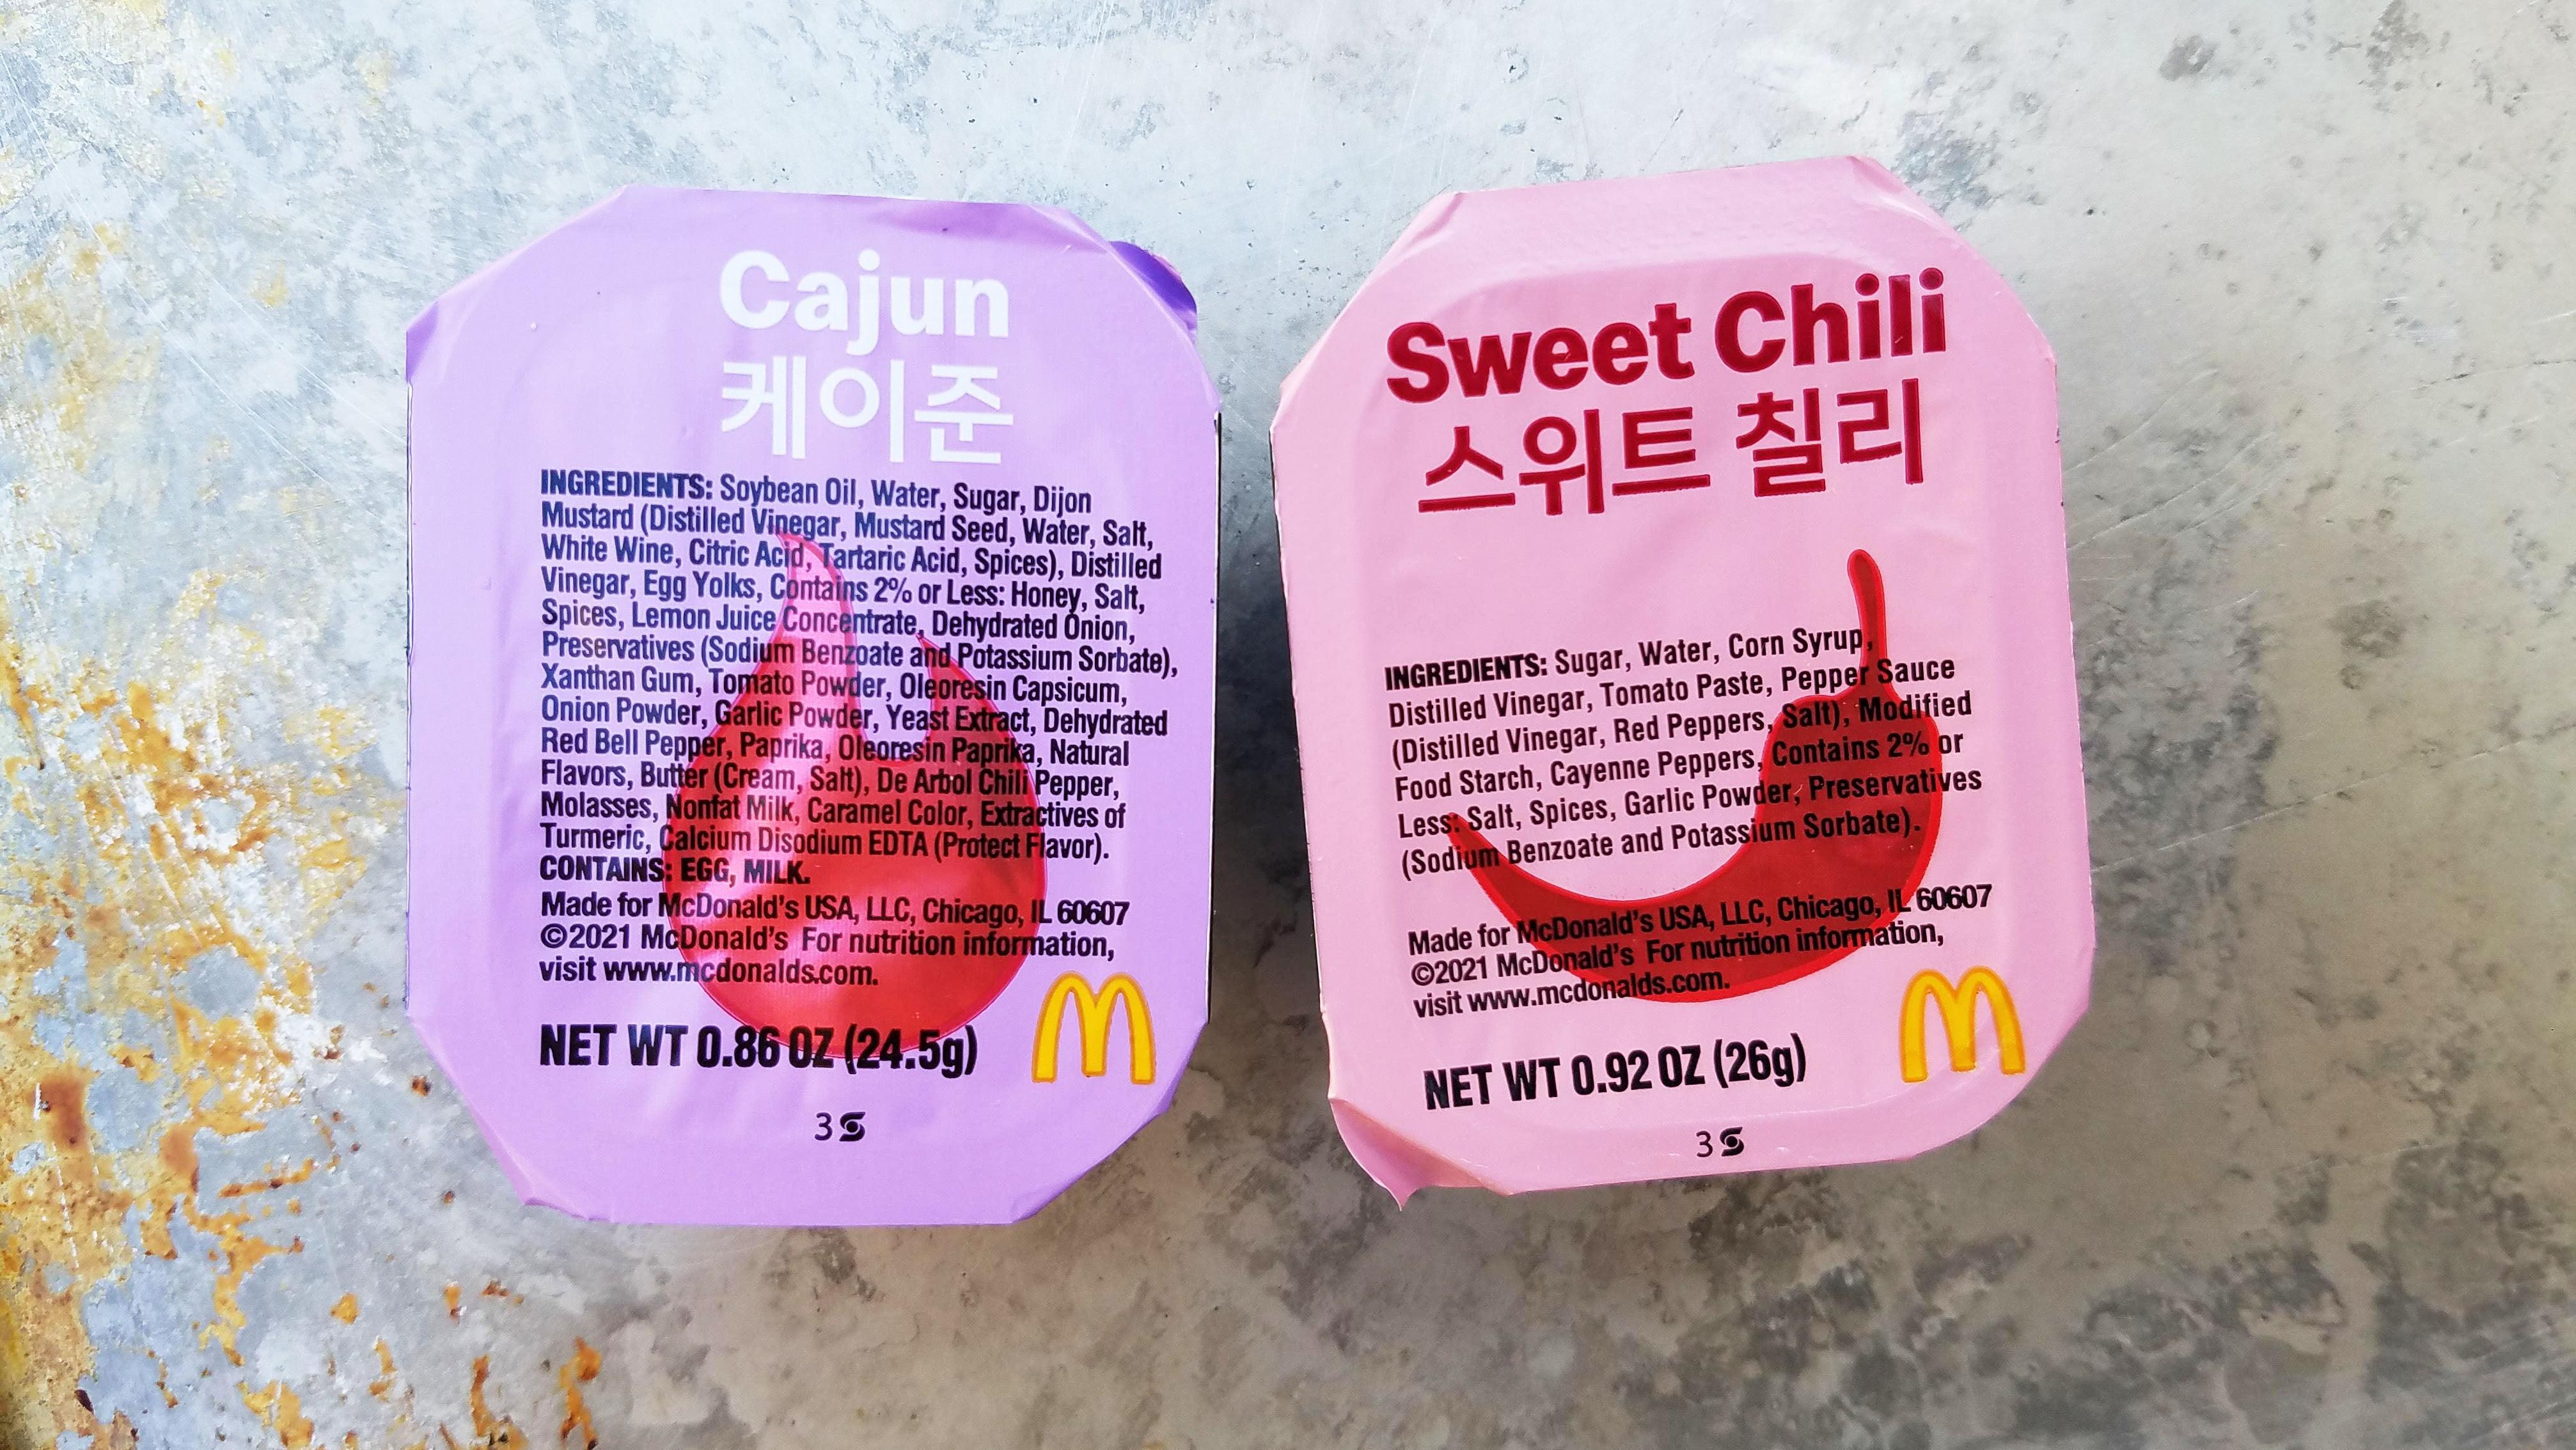 cajun and sweet chili sauces